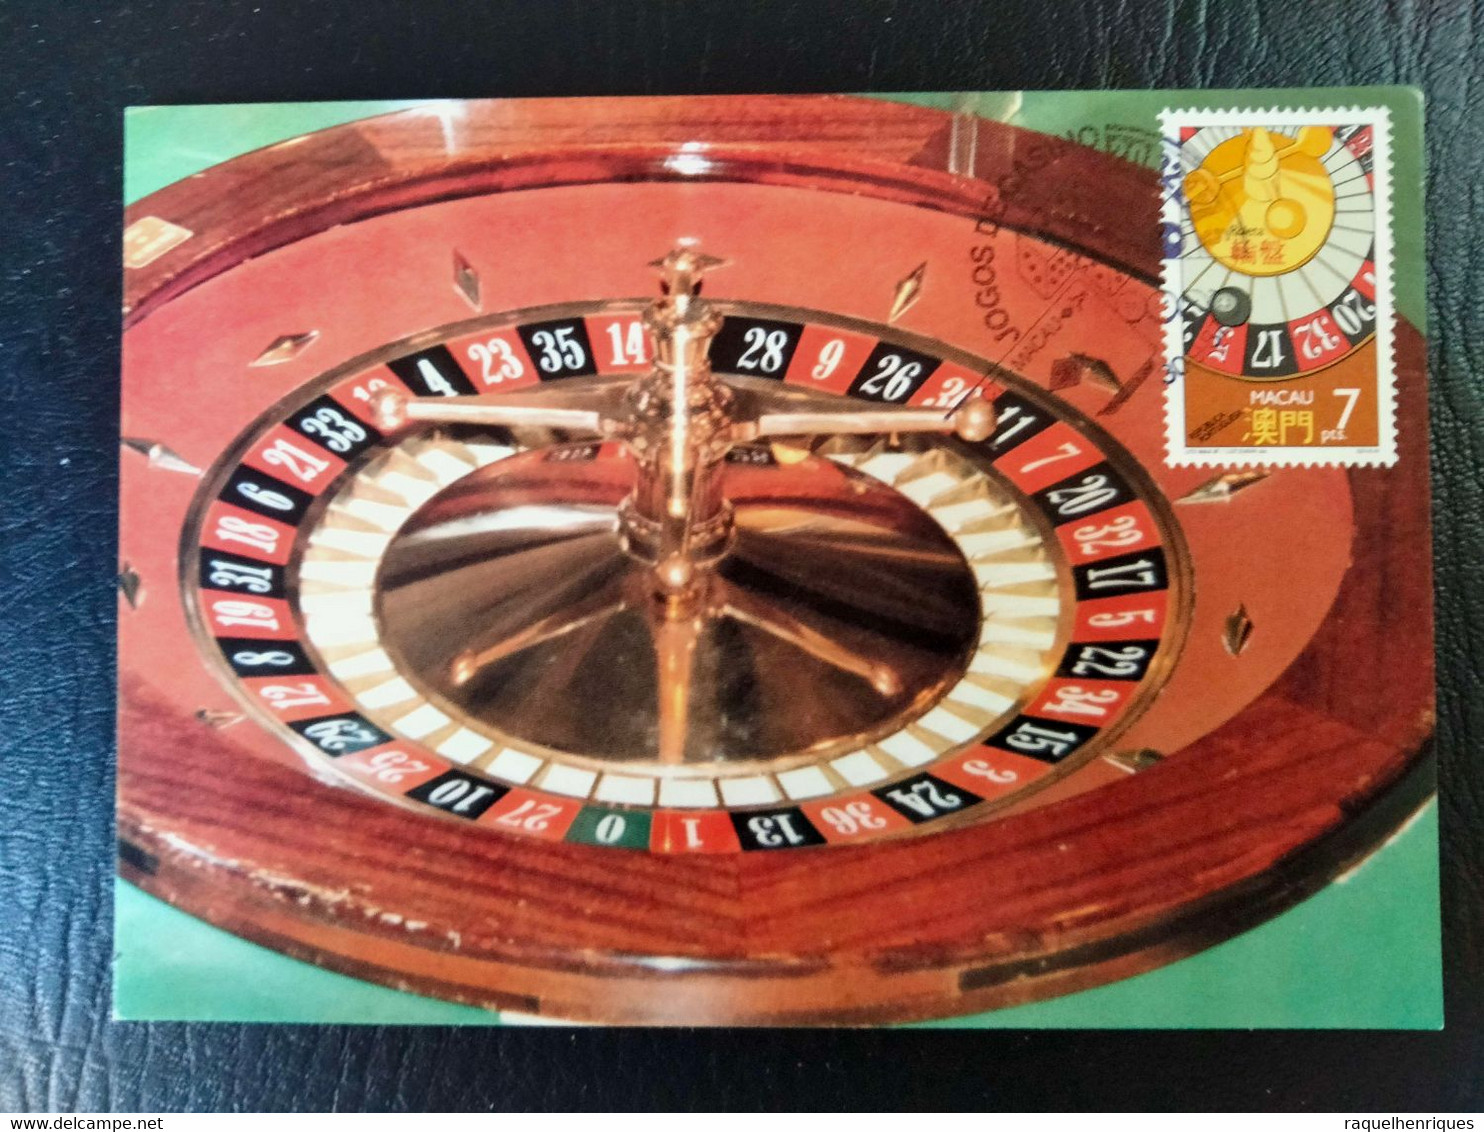 MACAU MAXIMUM CARS - 1987 Casino Games 4 CARDS FULL SET FIRST DAY CANCEL (SB1#01) - Maximumkarten